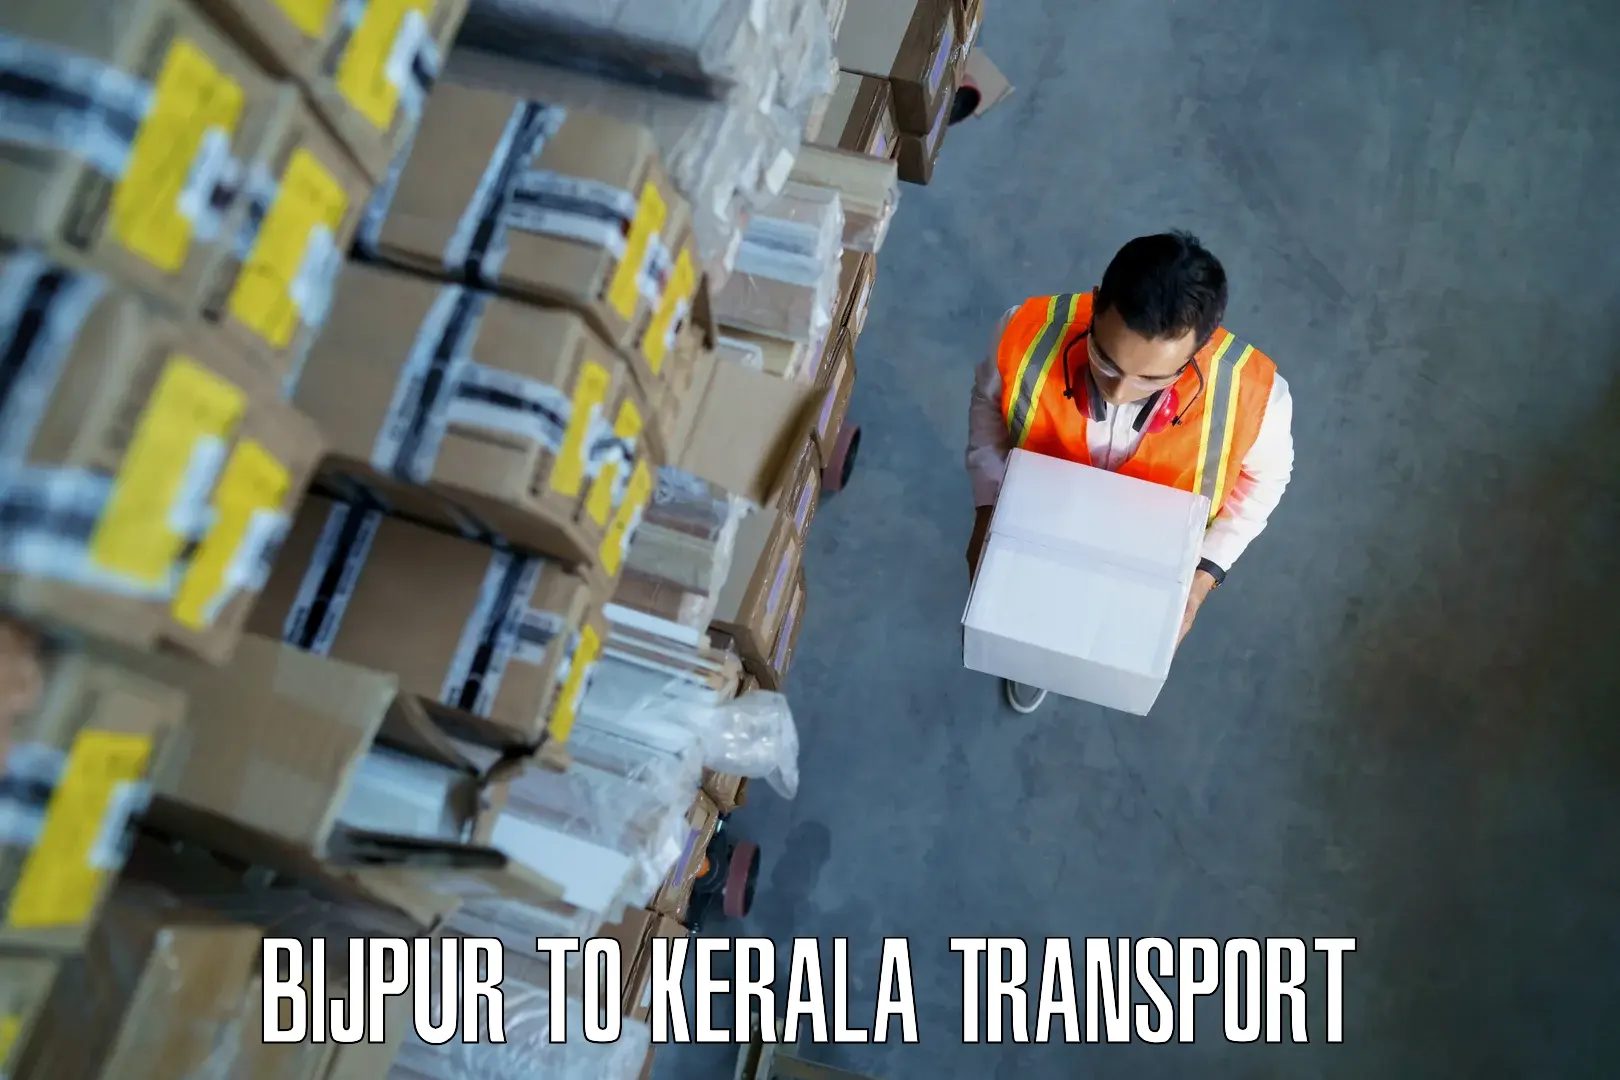 Daily transport service Bijpur to Calicut University Malappuram